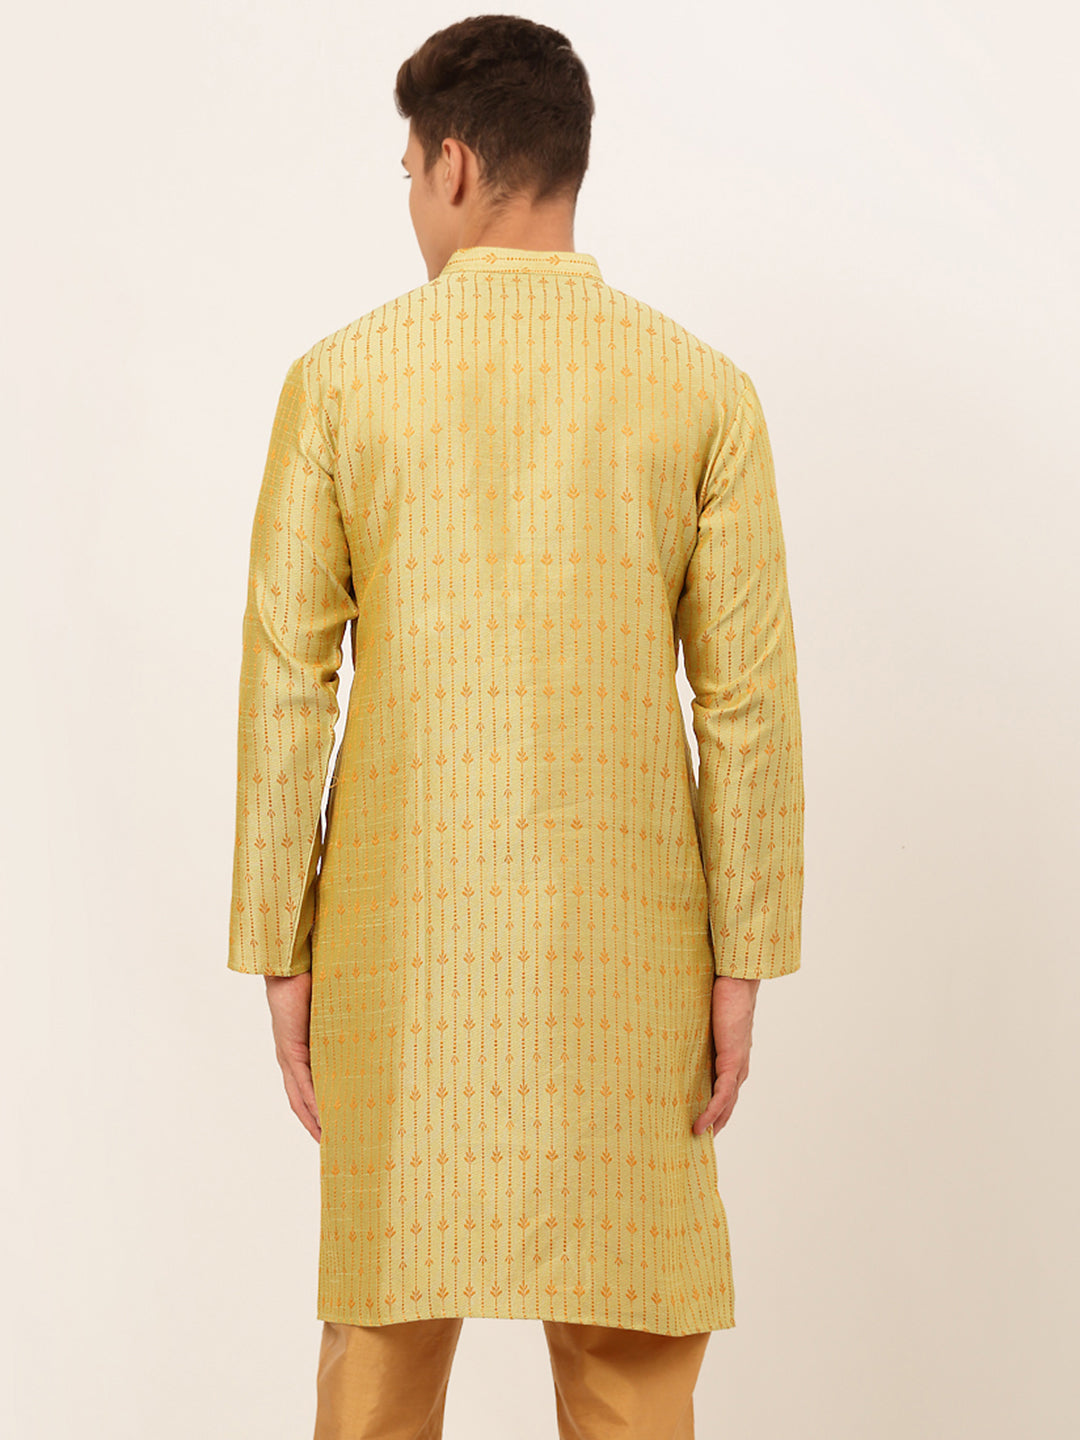 Men's Yellow Embroidered Kurta Only ( Ko 676 Yellow ) - Virat Fashions